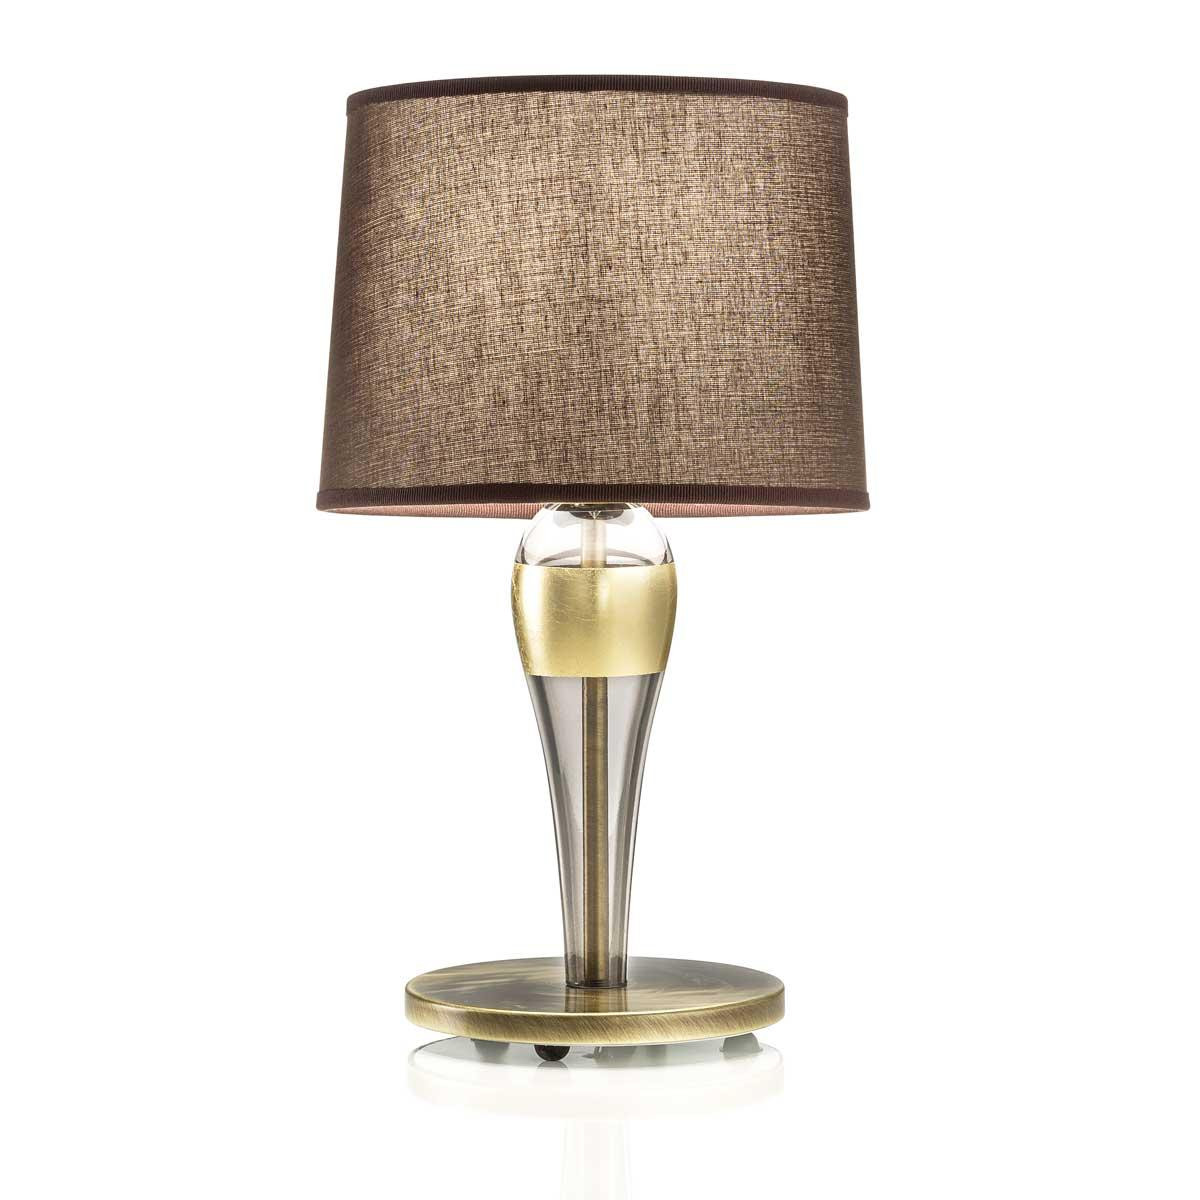 "Fia" Murano glass table lamp - 1 light - smoke and gold leaf